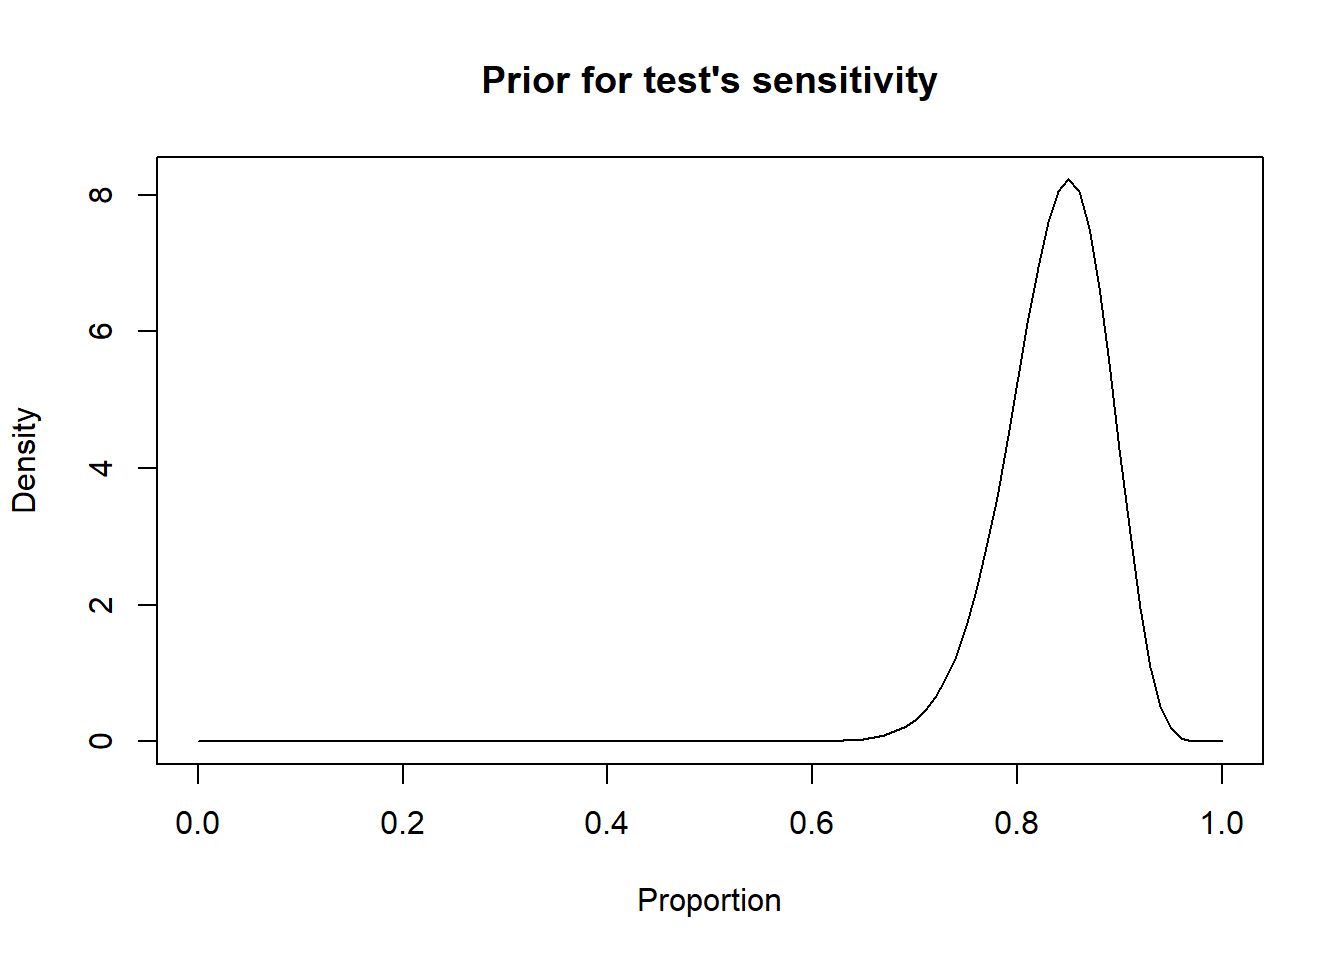 **Figure.** Density curve of a Beta distribution for a test sensitivity.